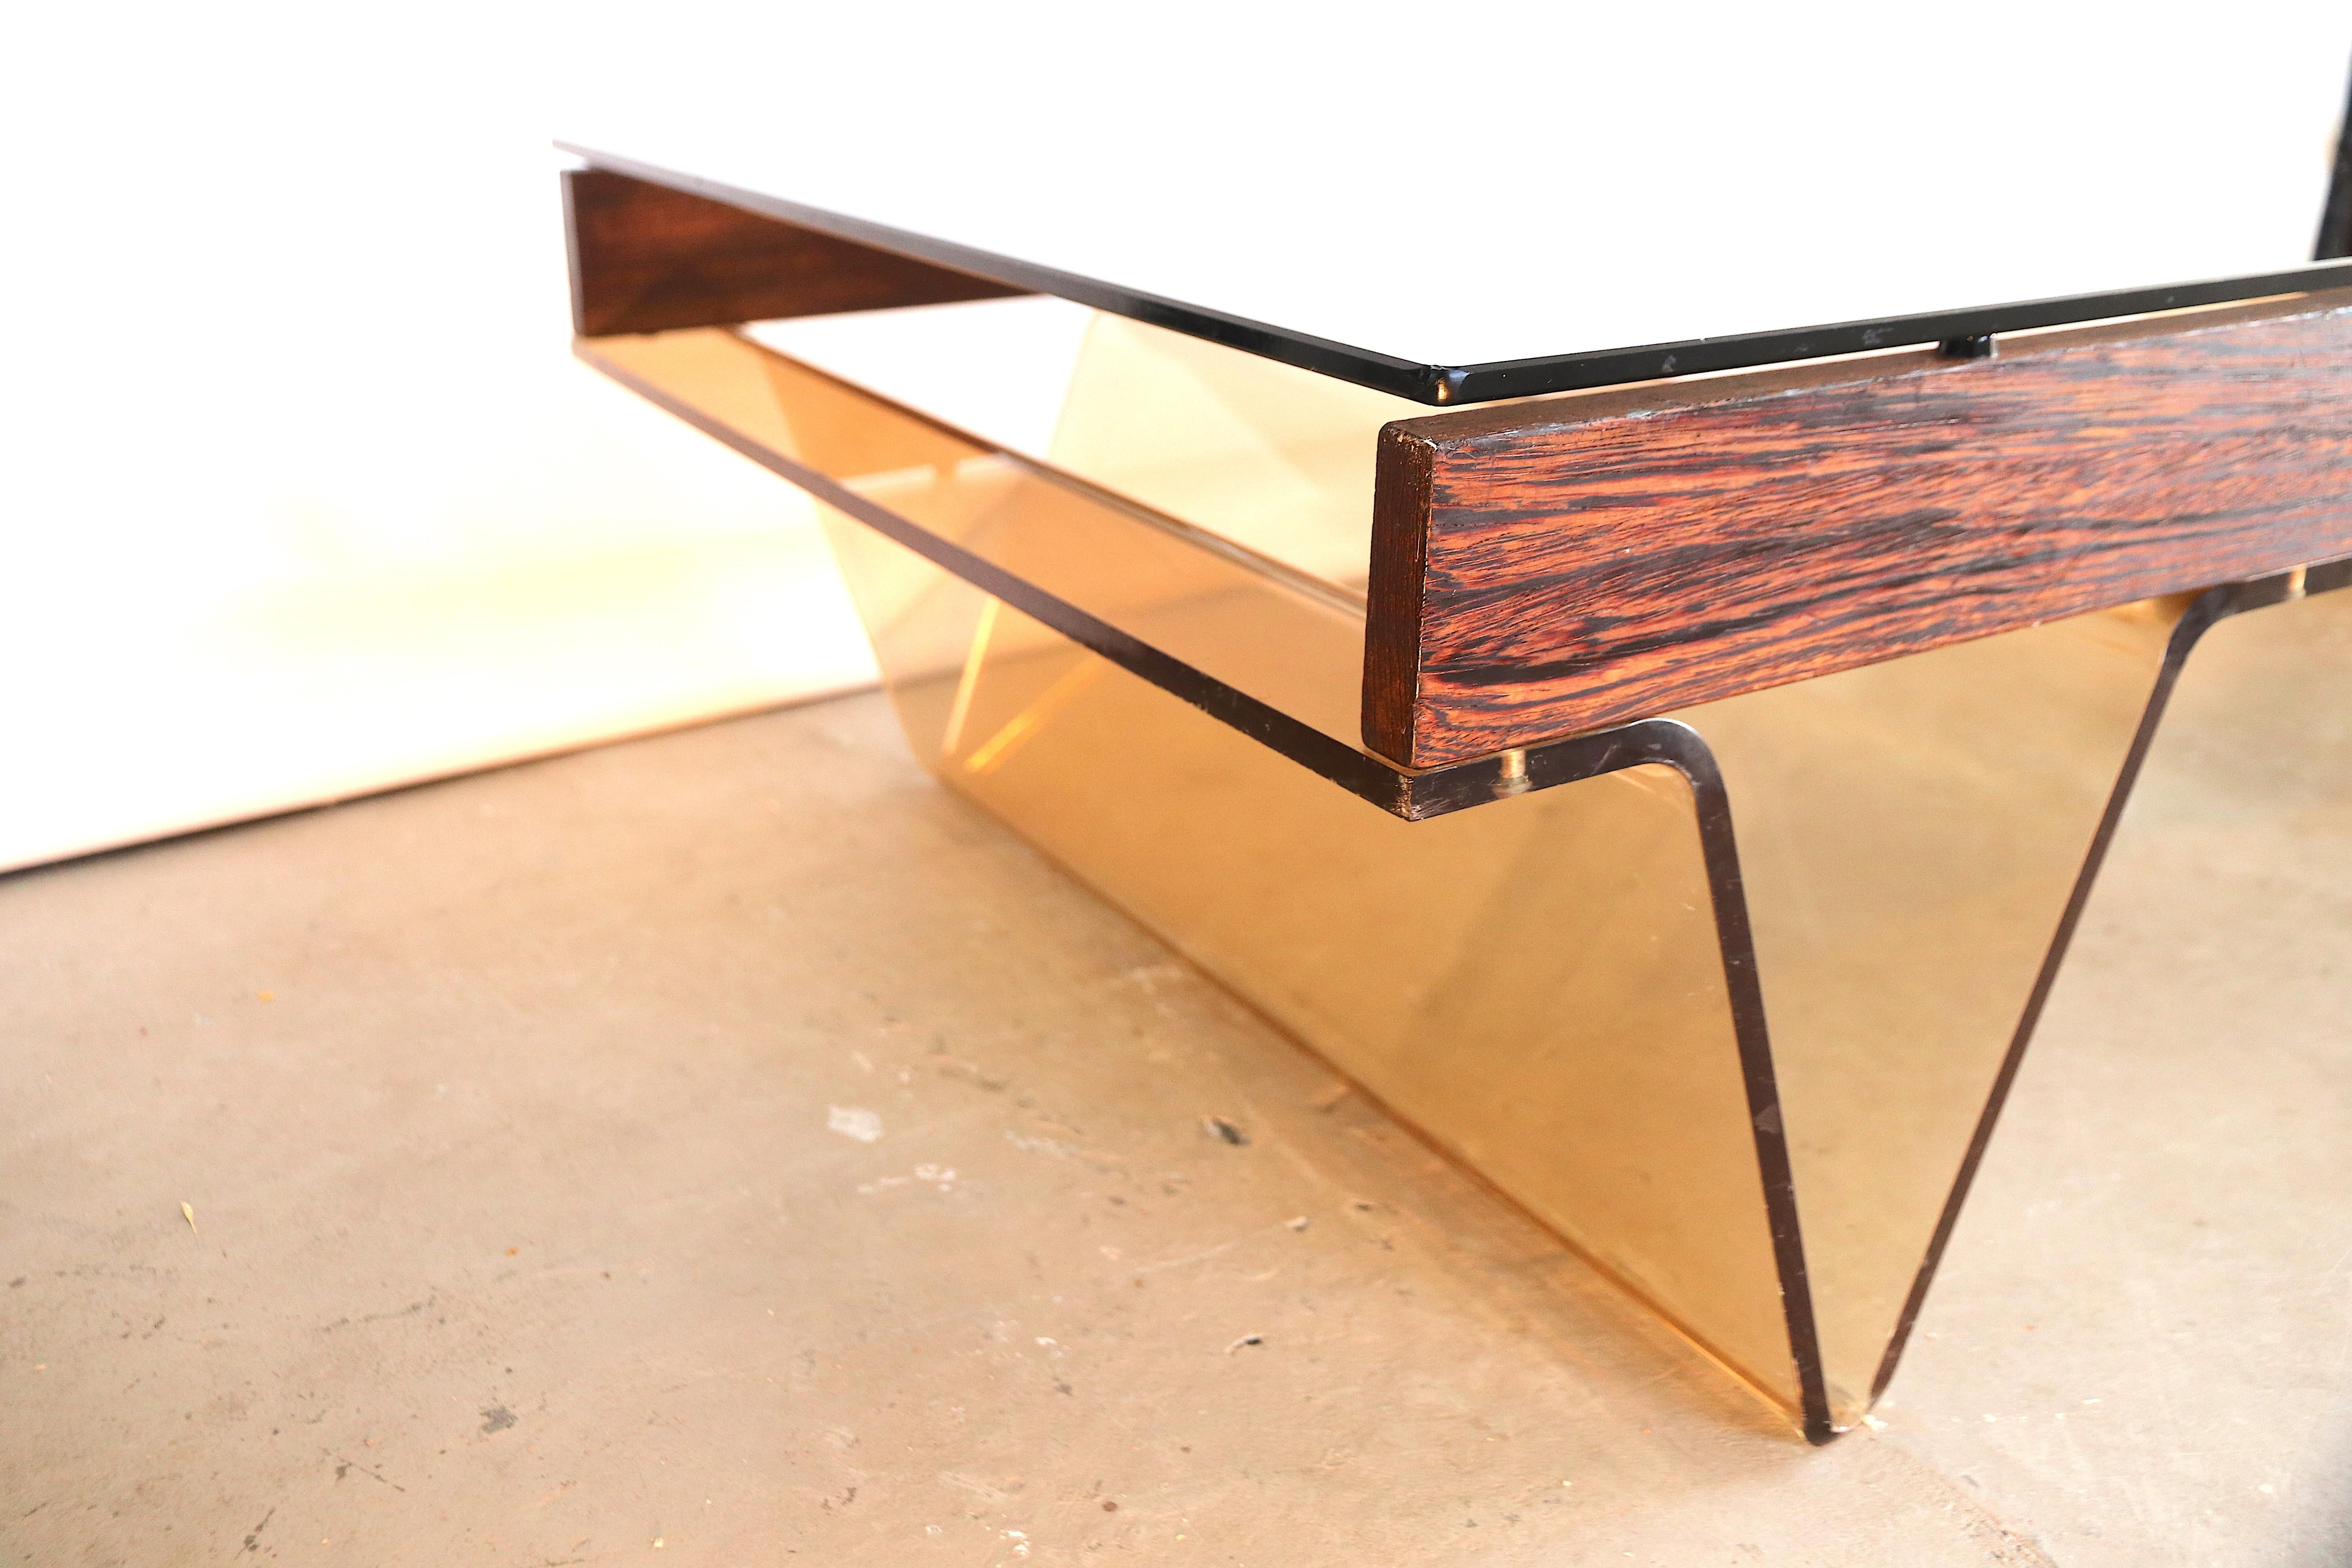 acrylic and wood coffee table